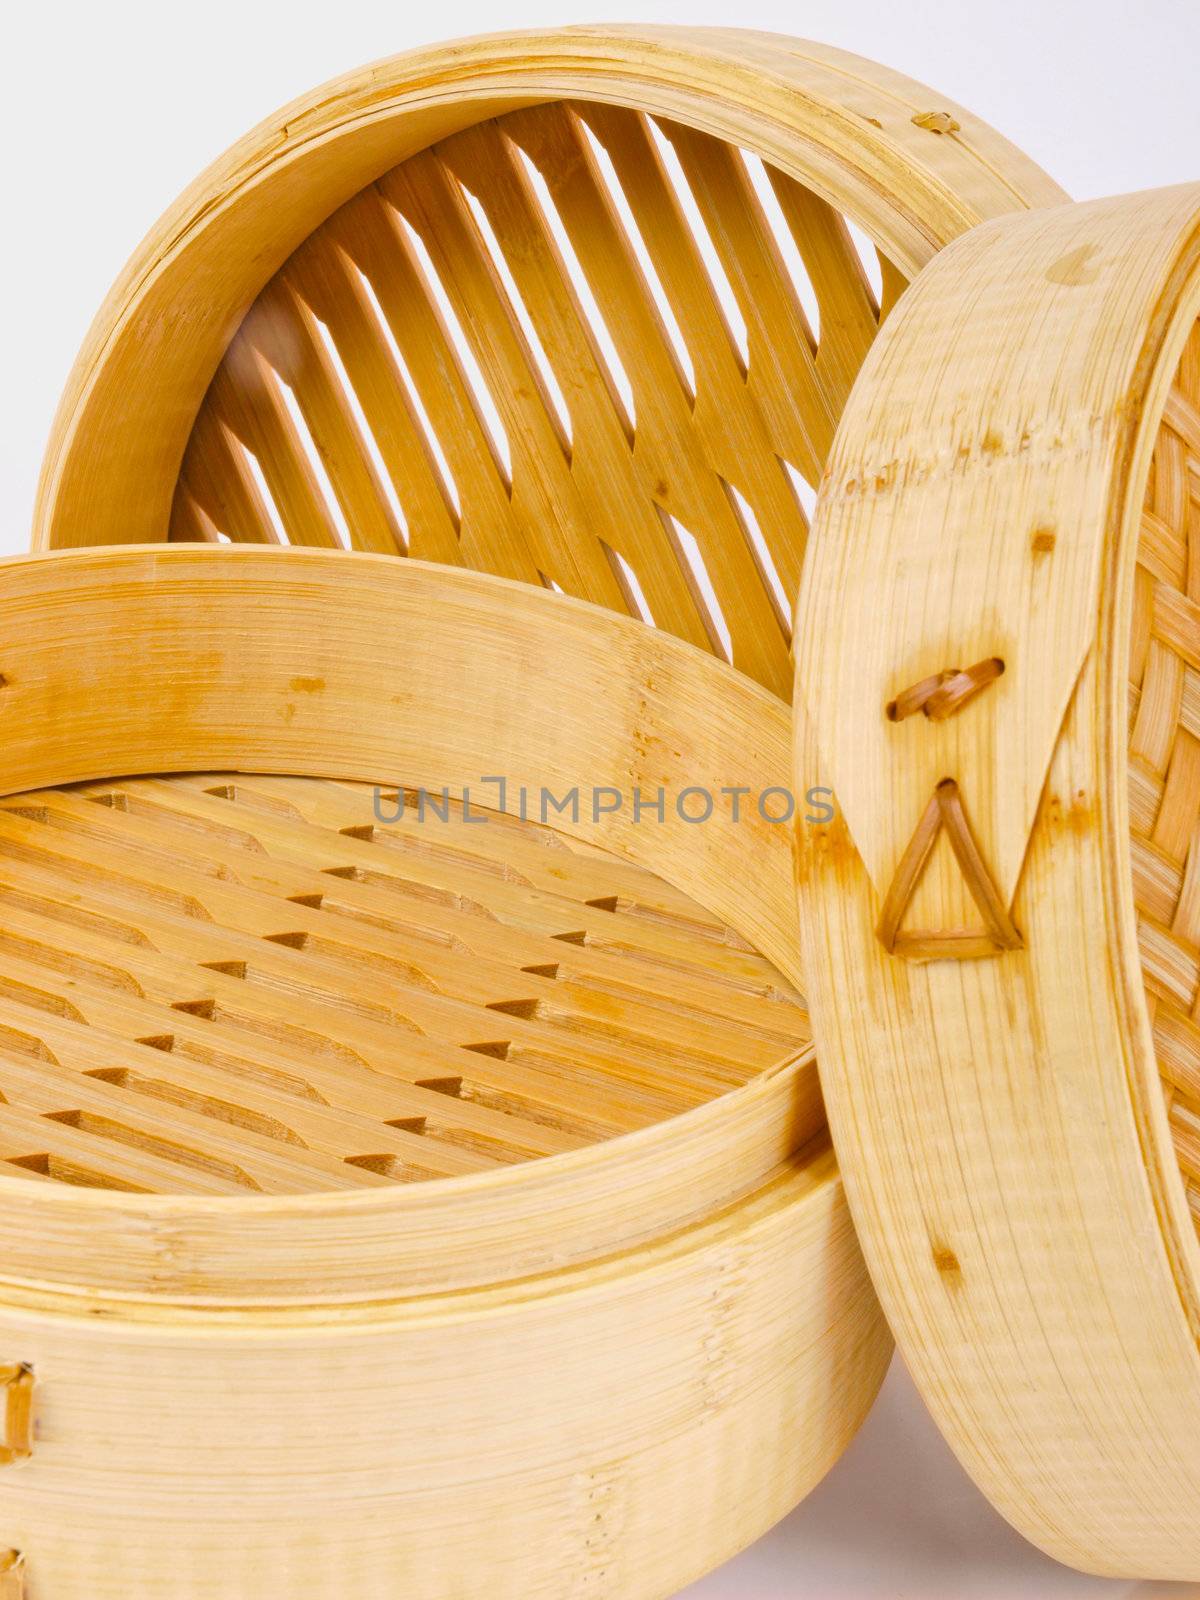 Bamboo Streamer by dotweb